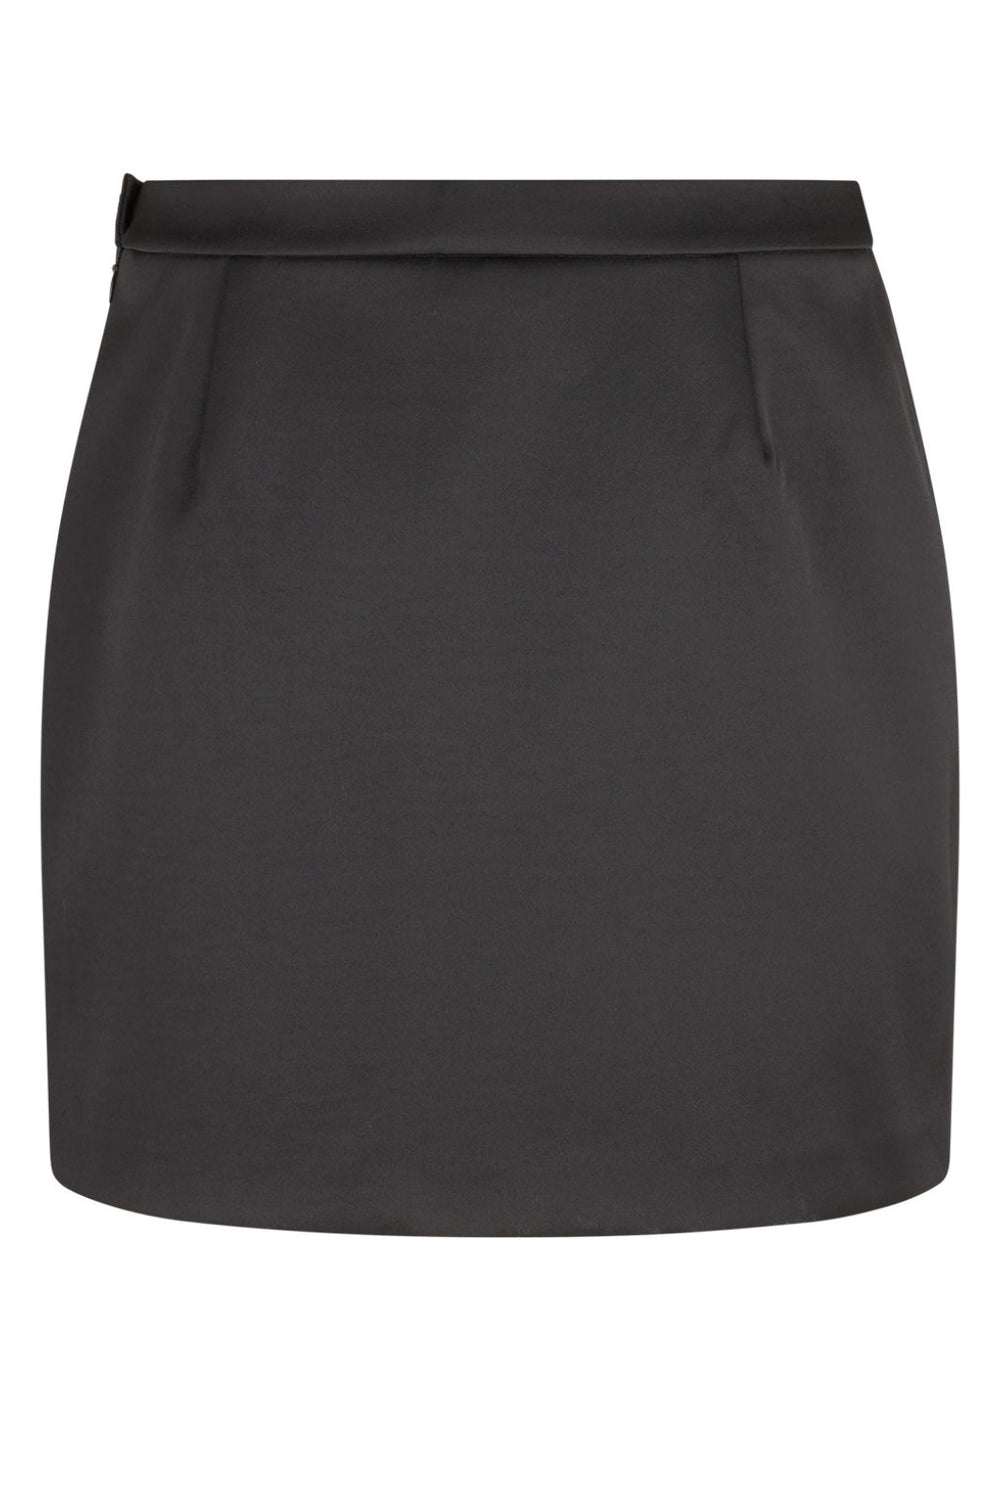 Forudbestilling - Cras - Samycras Skirt - Black (Oktober) Nederdele 